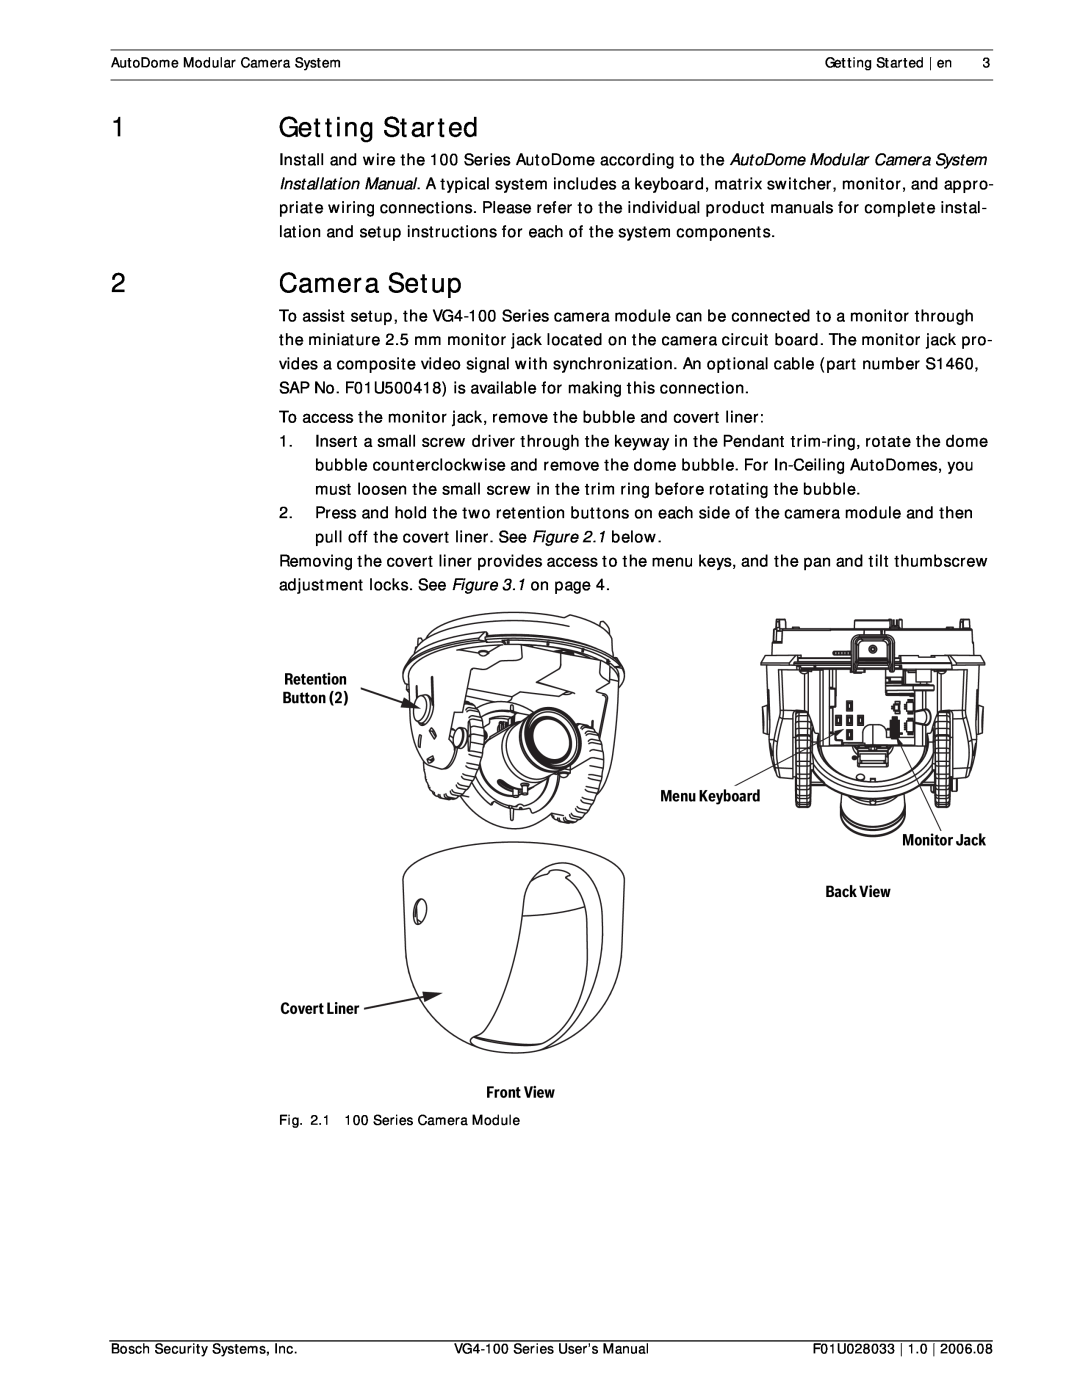 Bosch Appliances VG4-100 user manual Getting Started, Camera Setup, RetentionRetenti, Front View 